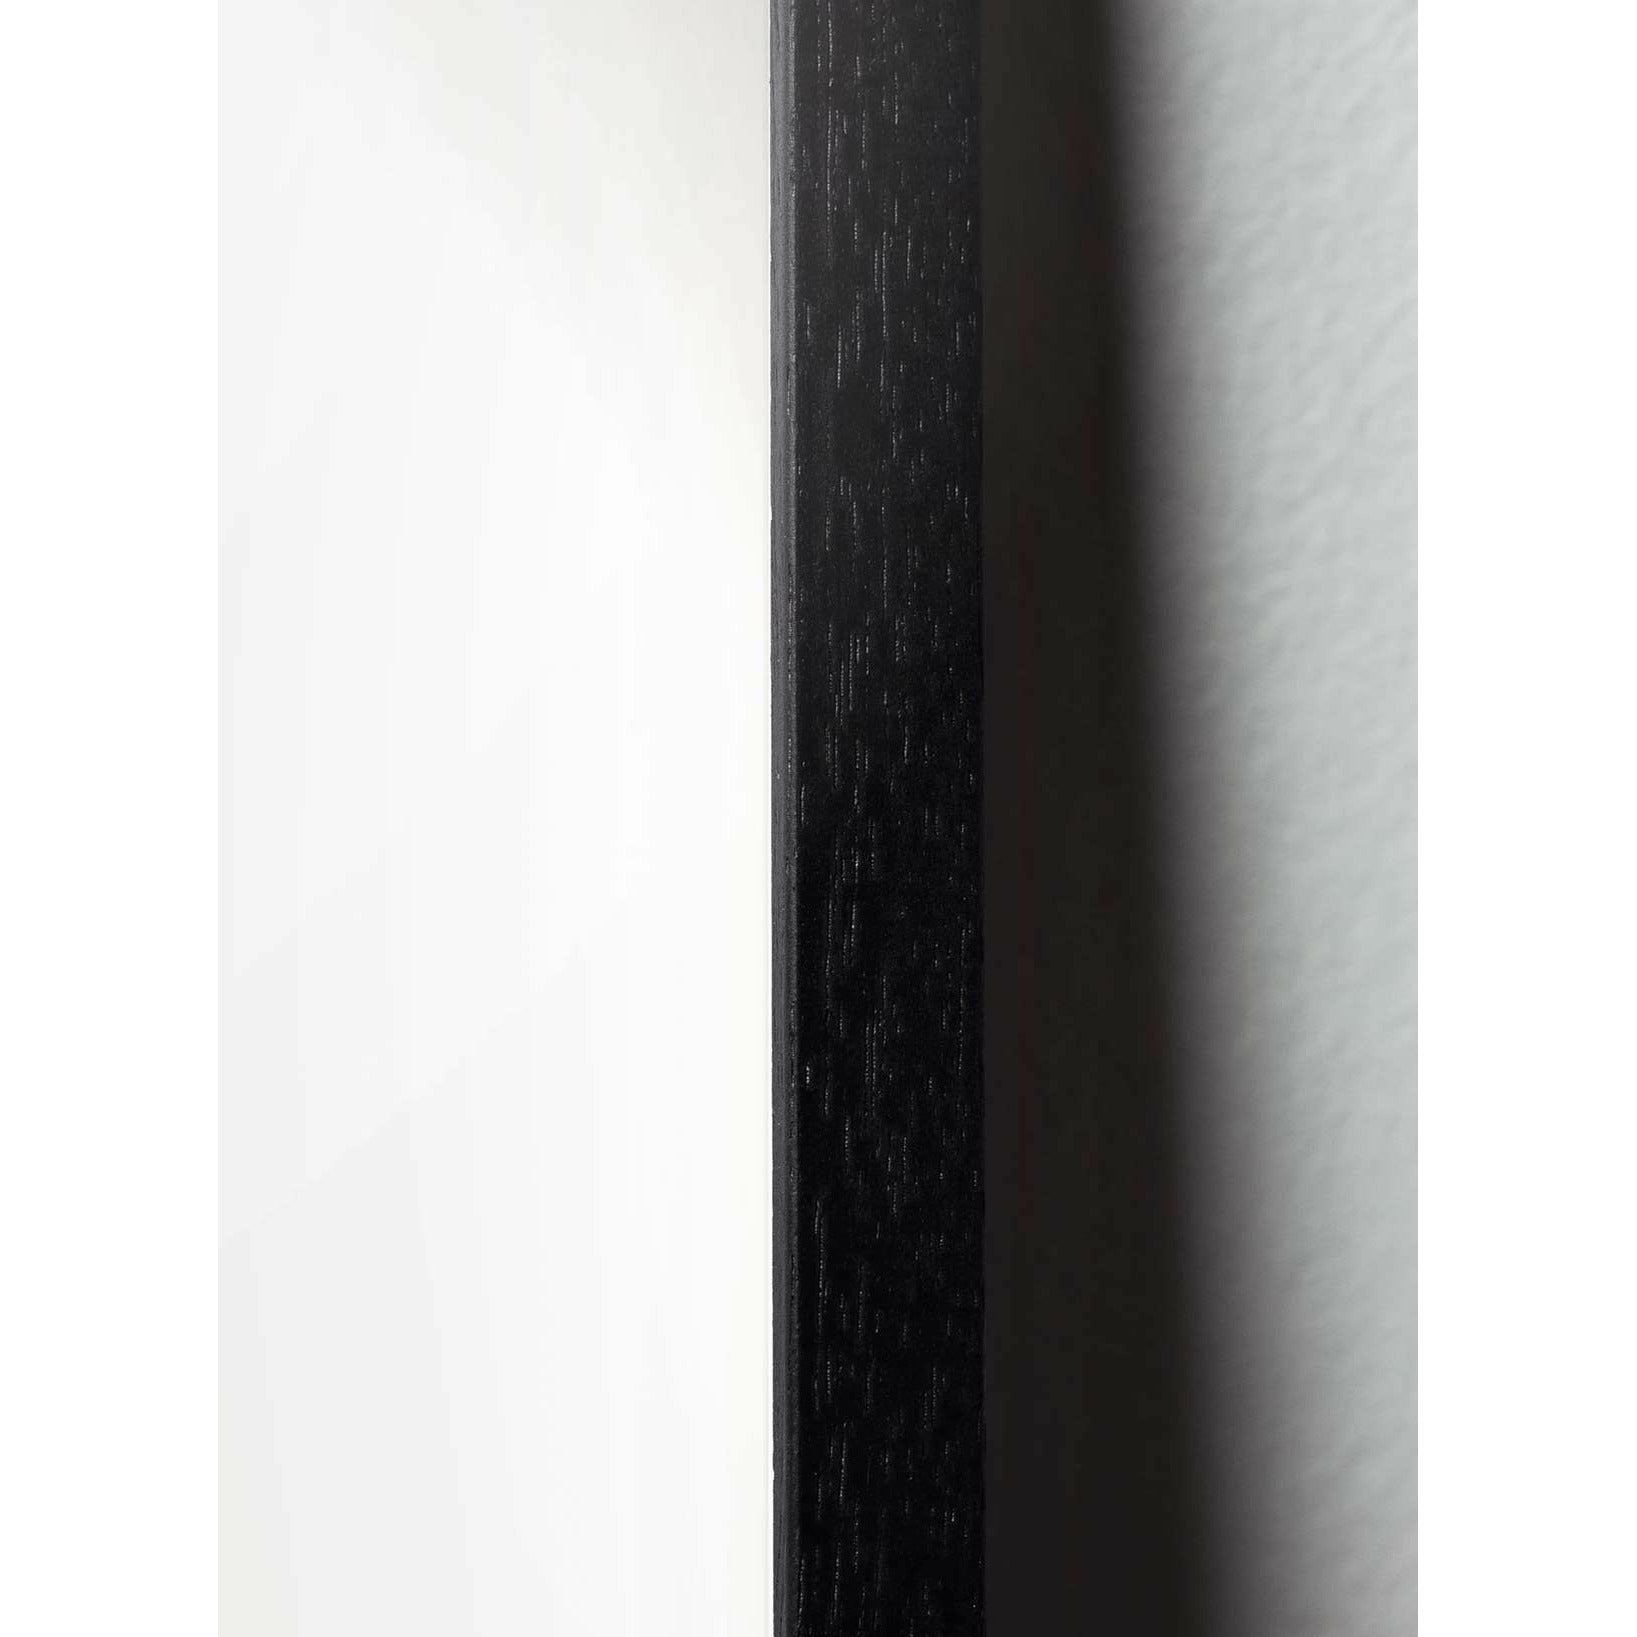 Brainchild Nallebjörn klassisk affisch, ram i svart -målat trä 70x100 cm, vit bakgrund